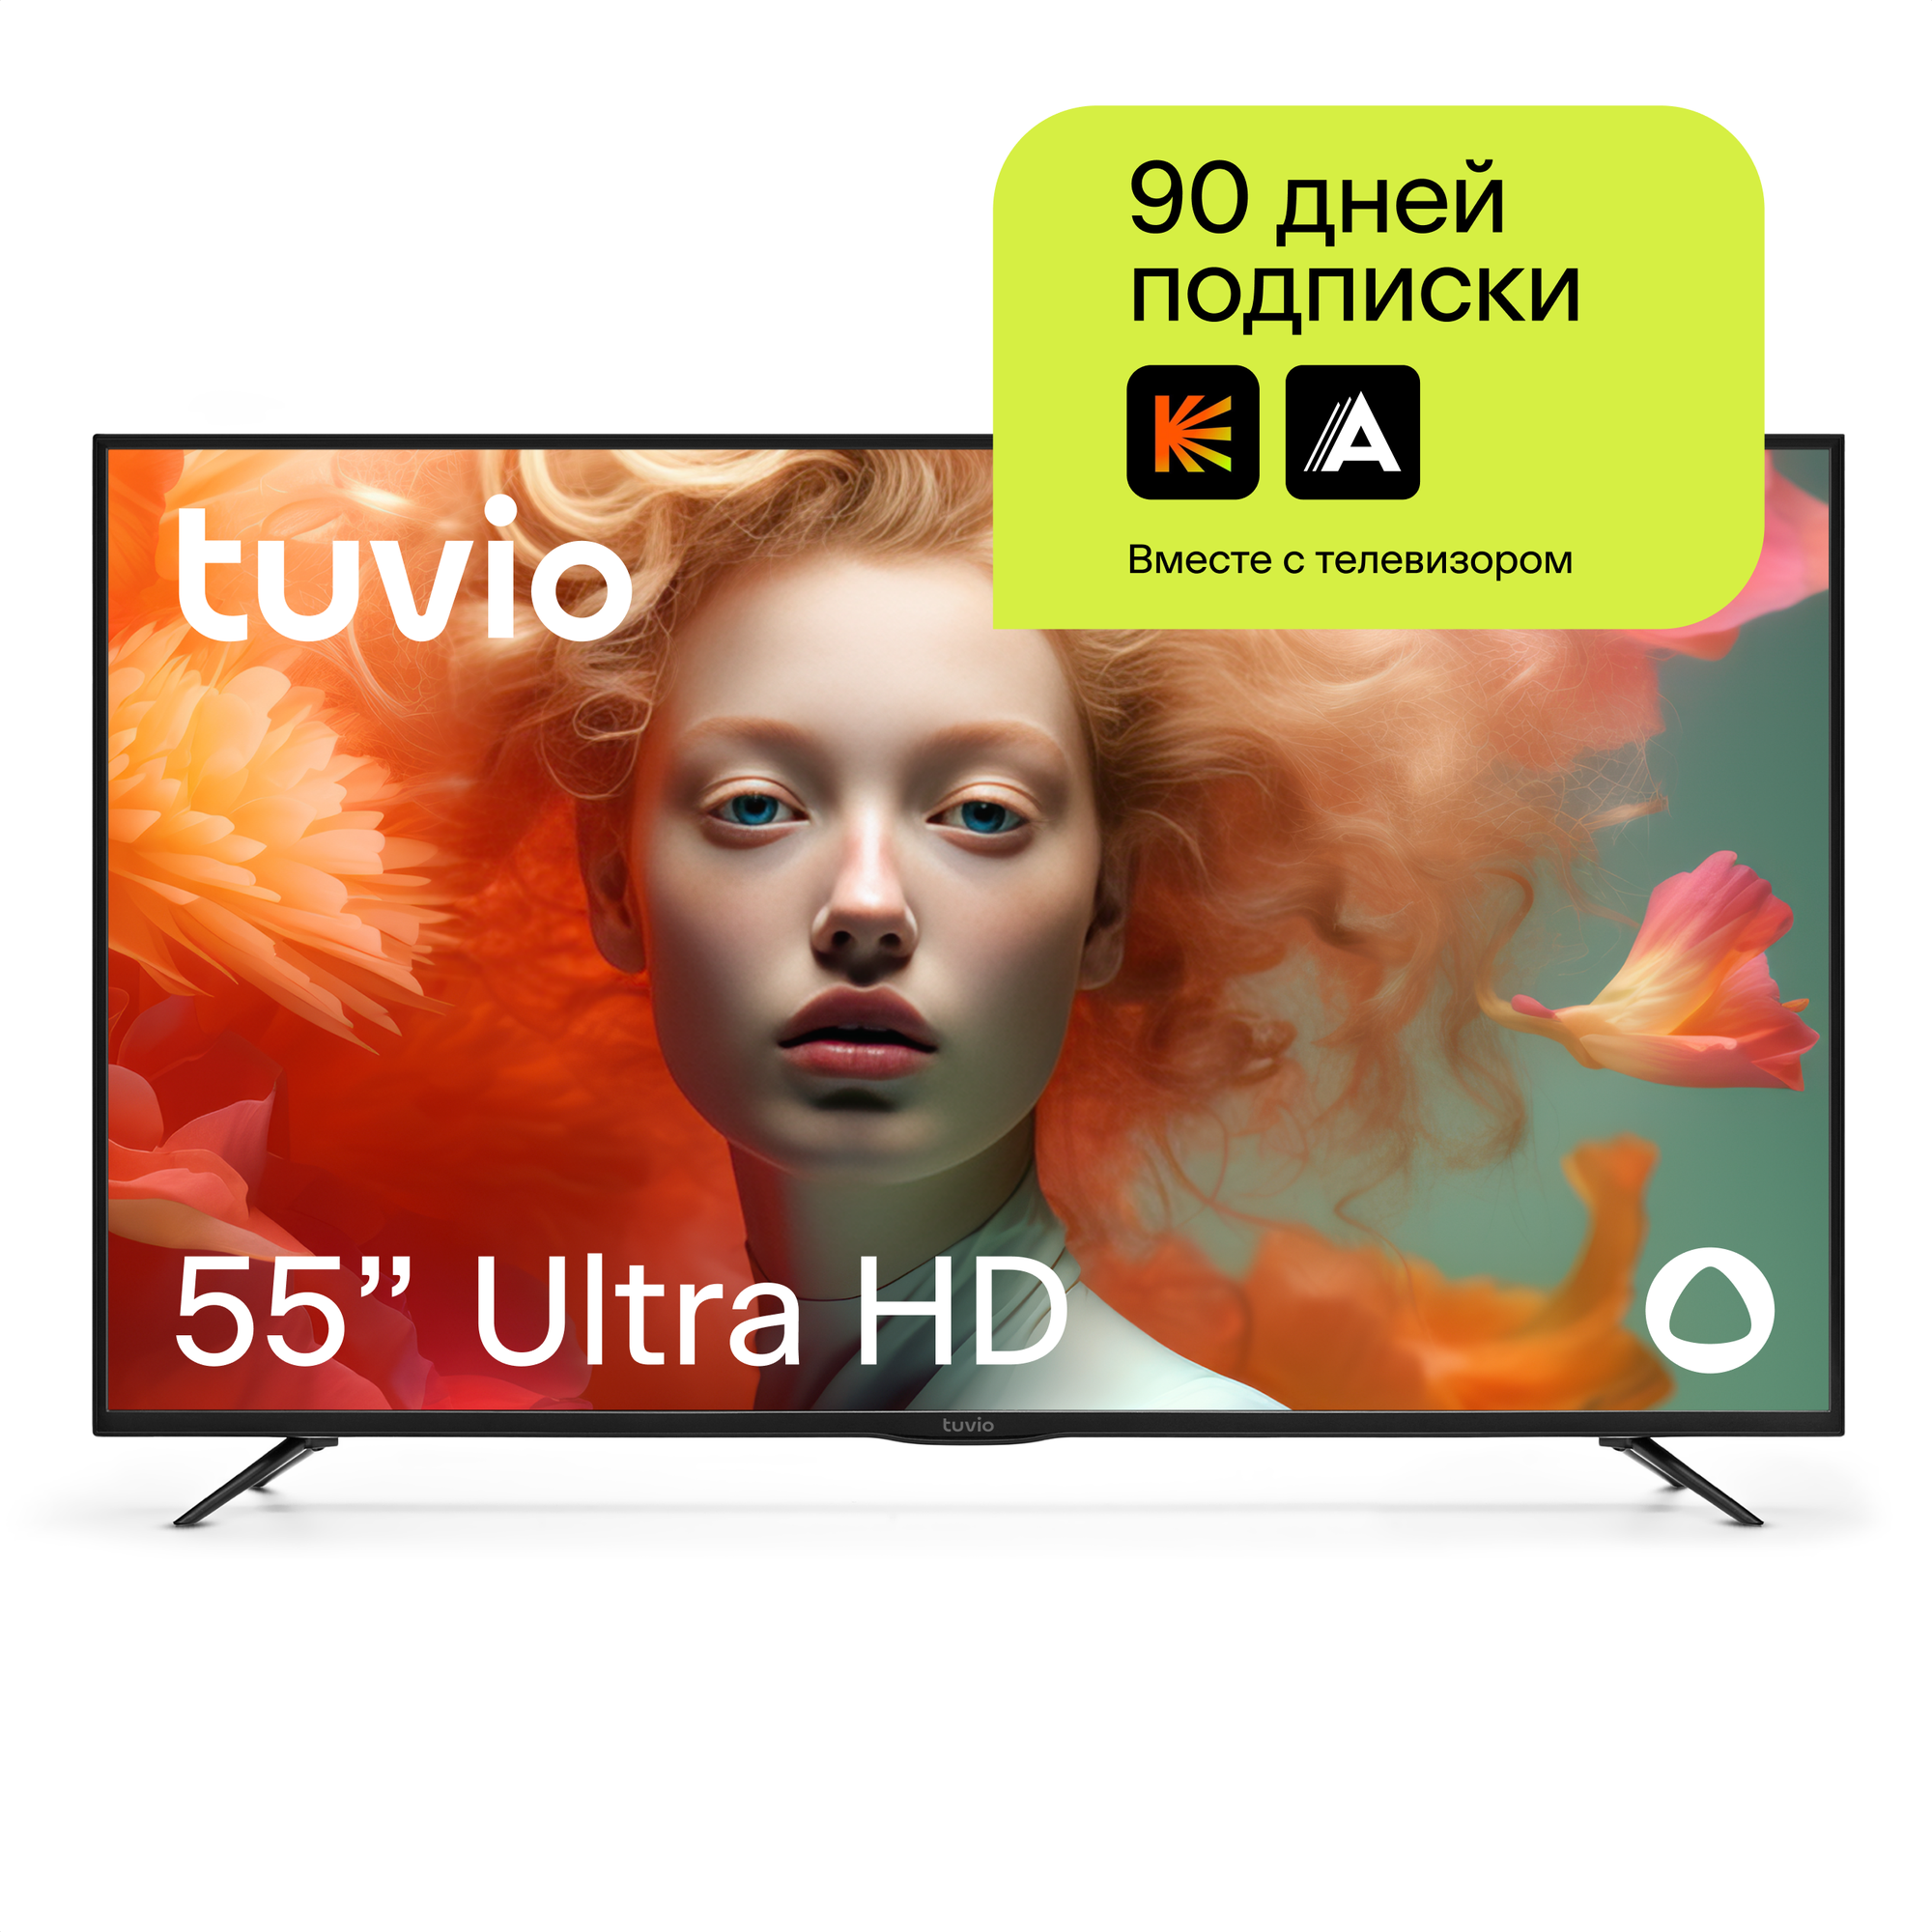 55” Телевизор Tuvio 4K ULTRA HD DLED на платформе YaOS, STV-55FDUBK1R, черный